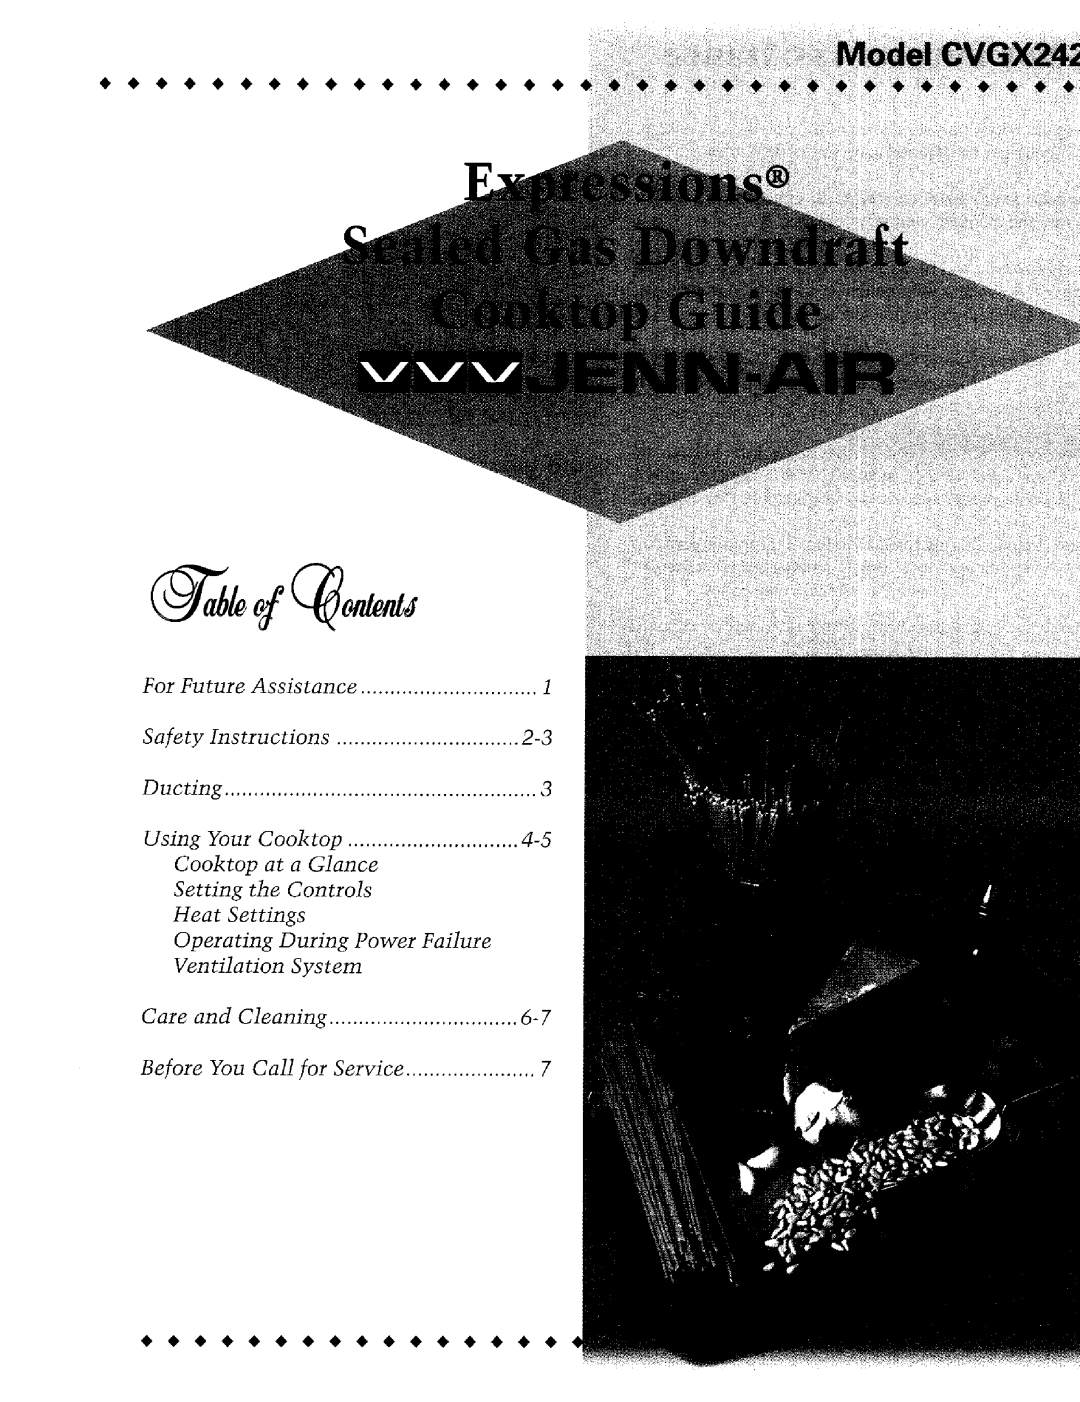 Jenn-Air CVGX242 manual For Future 